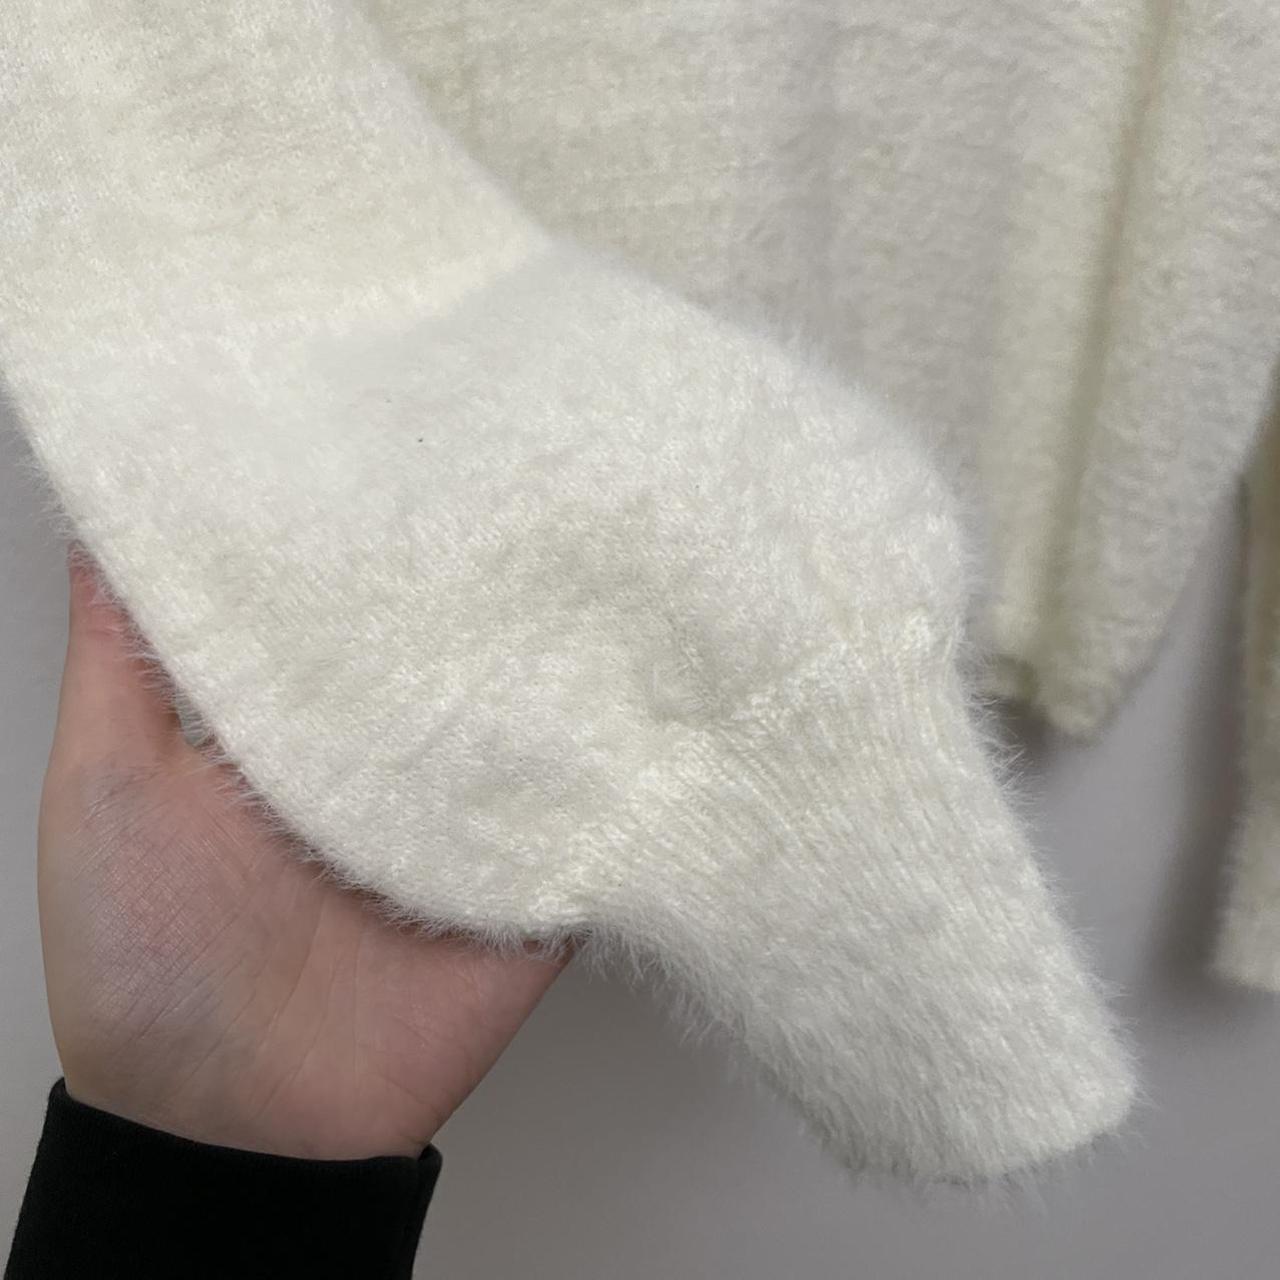 White/cream fluffy jumper with shoulder detail... - Depop